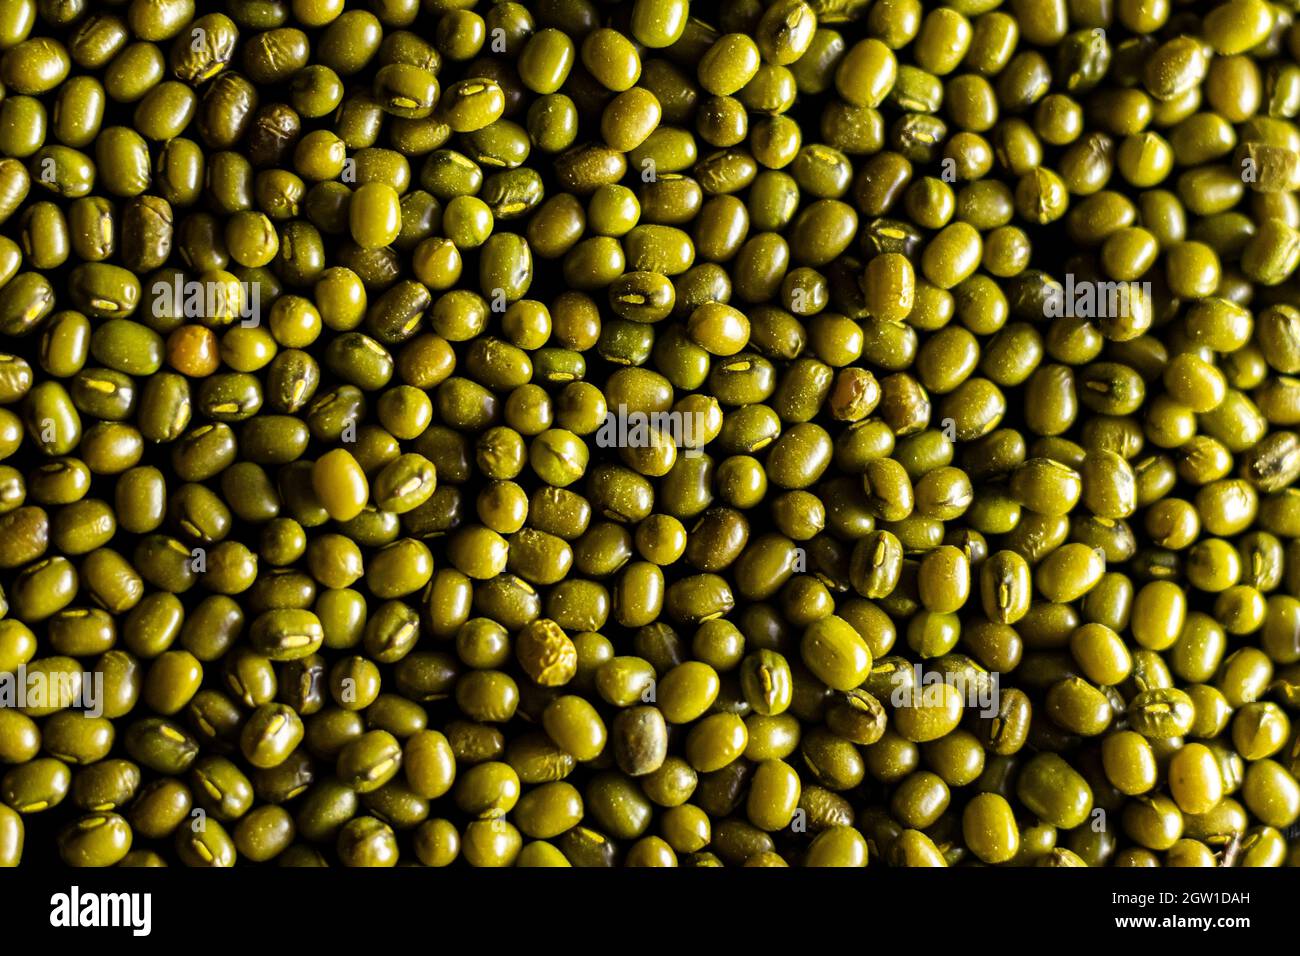 Full Frame Top View Shot Of Mung Bean, Green Gram, Maash Or Moong Of Legume Family Stock Photo